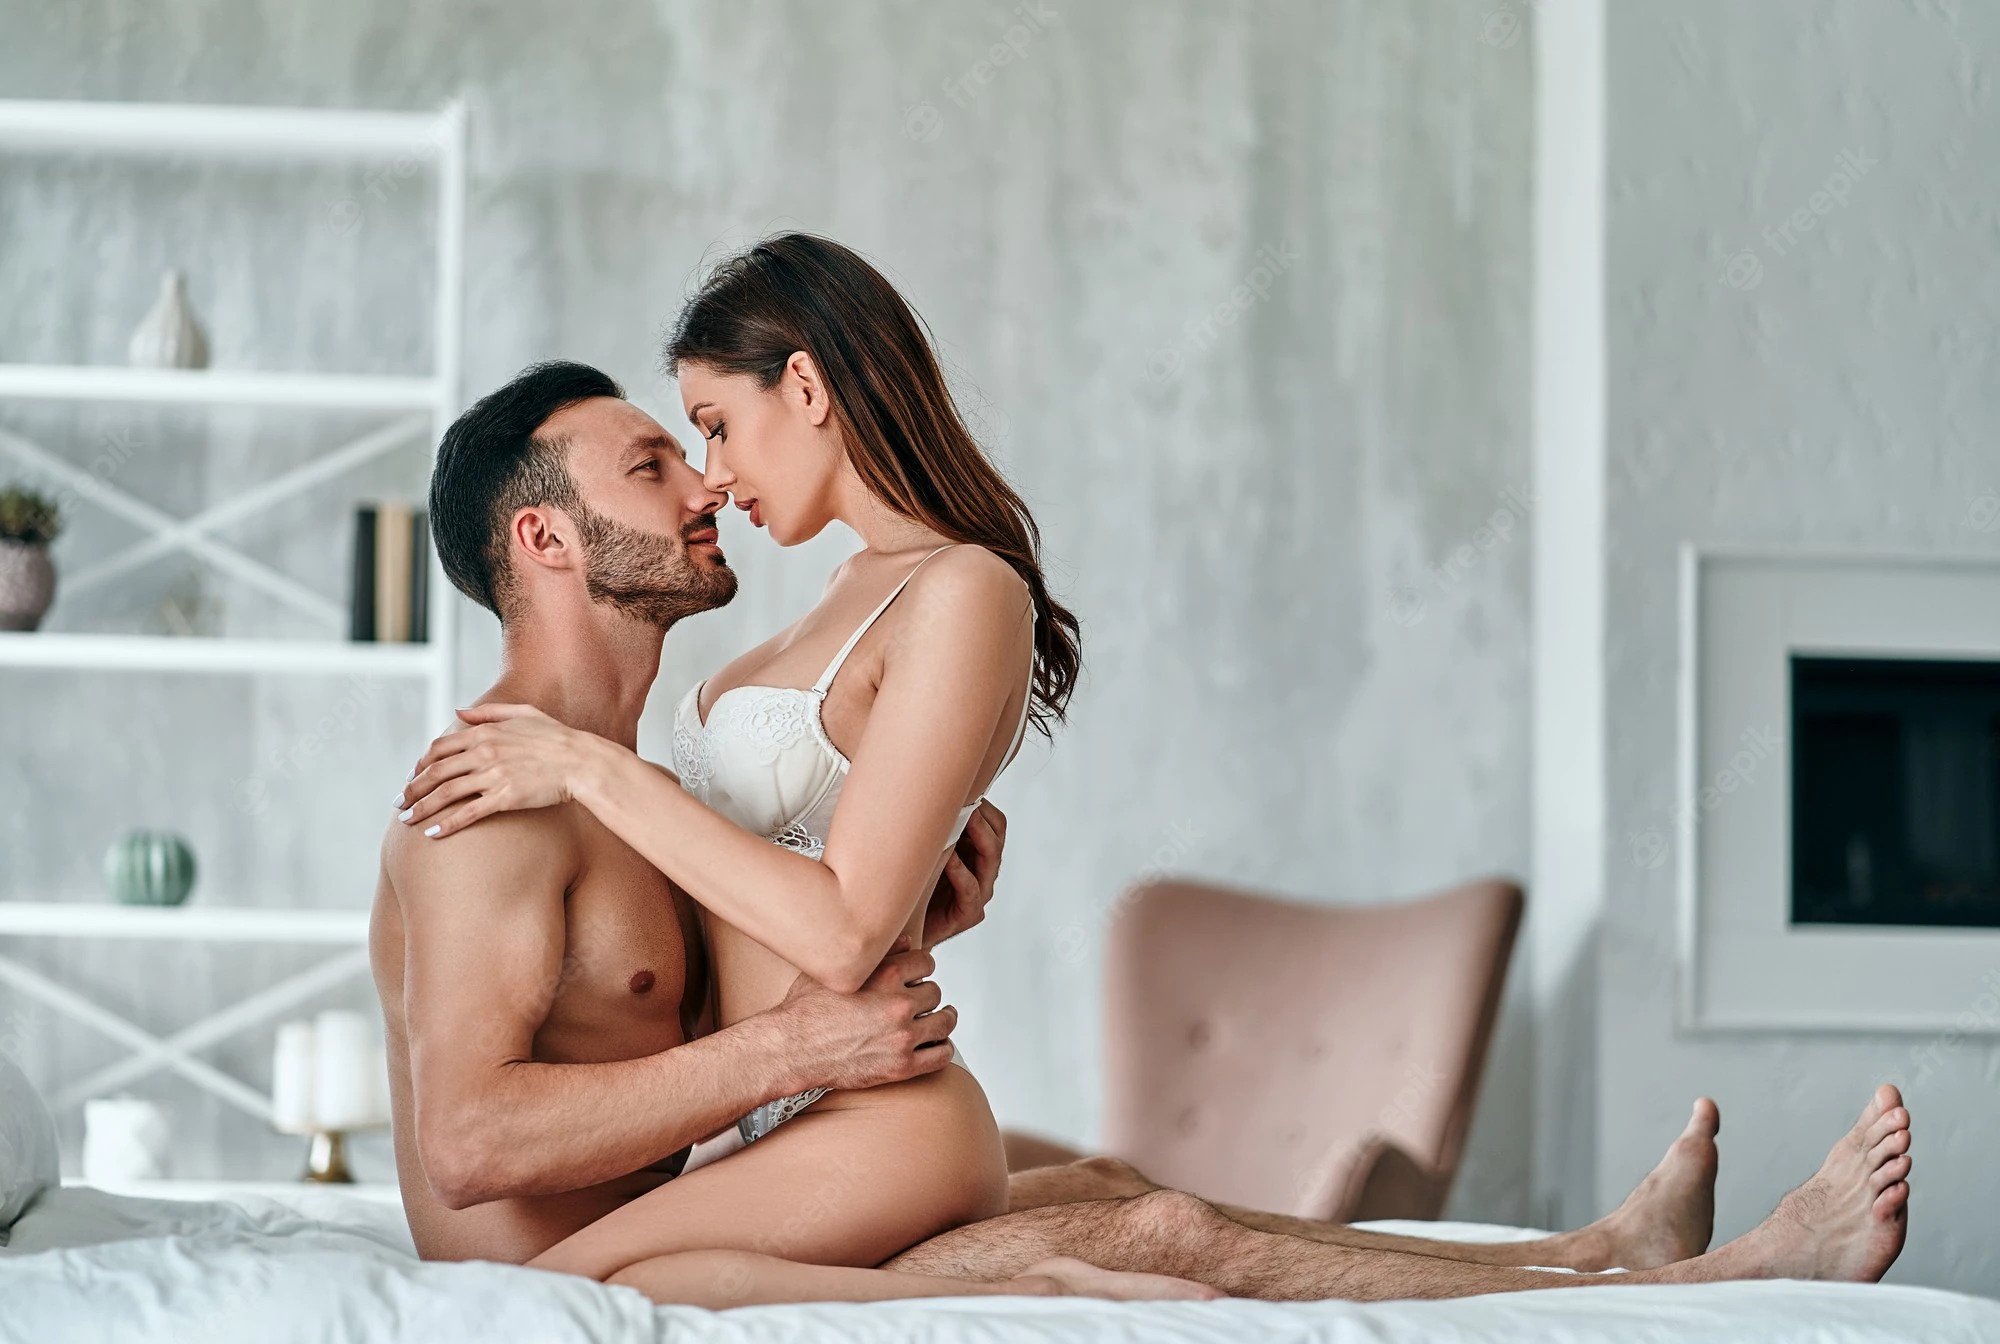 Rumanticxxx - Top 2 Best Sites To Watch Romantic Porn Videos 2022